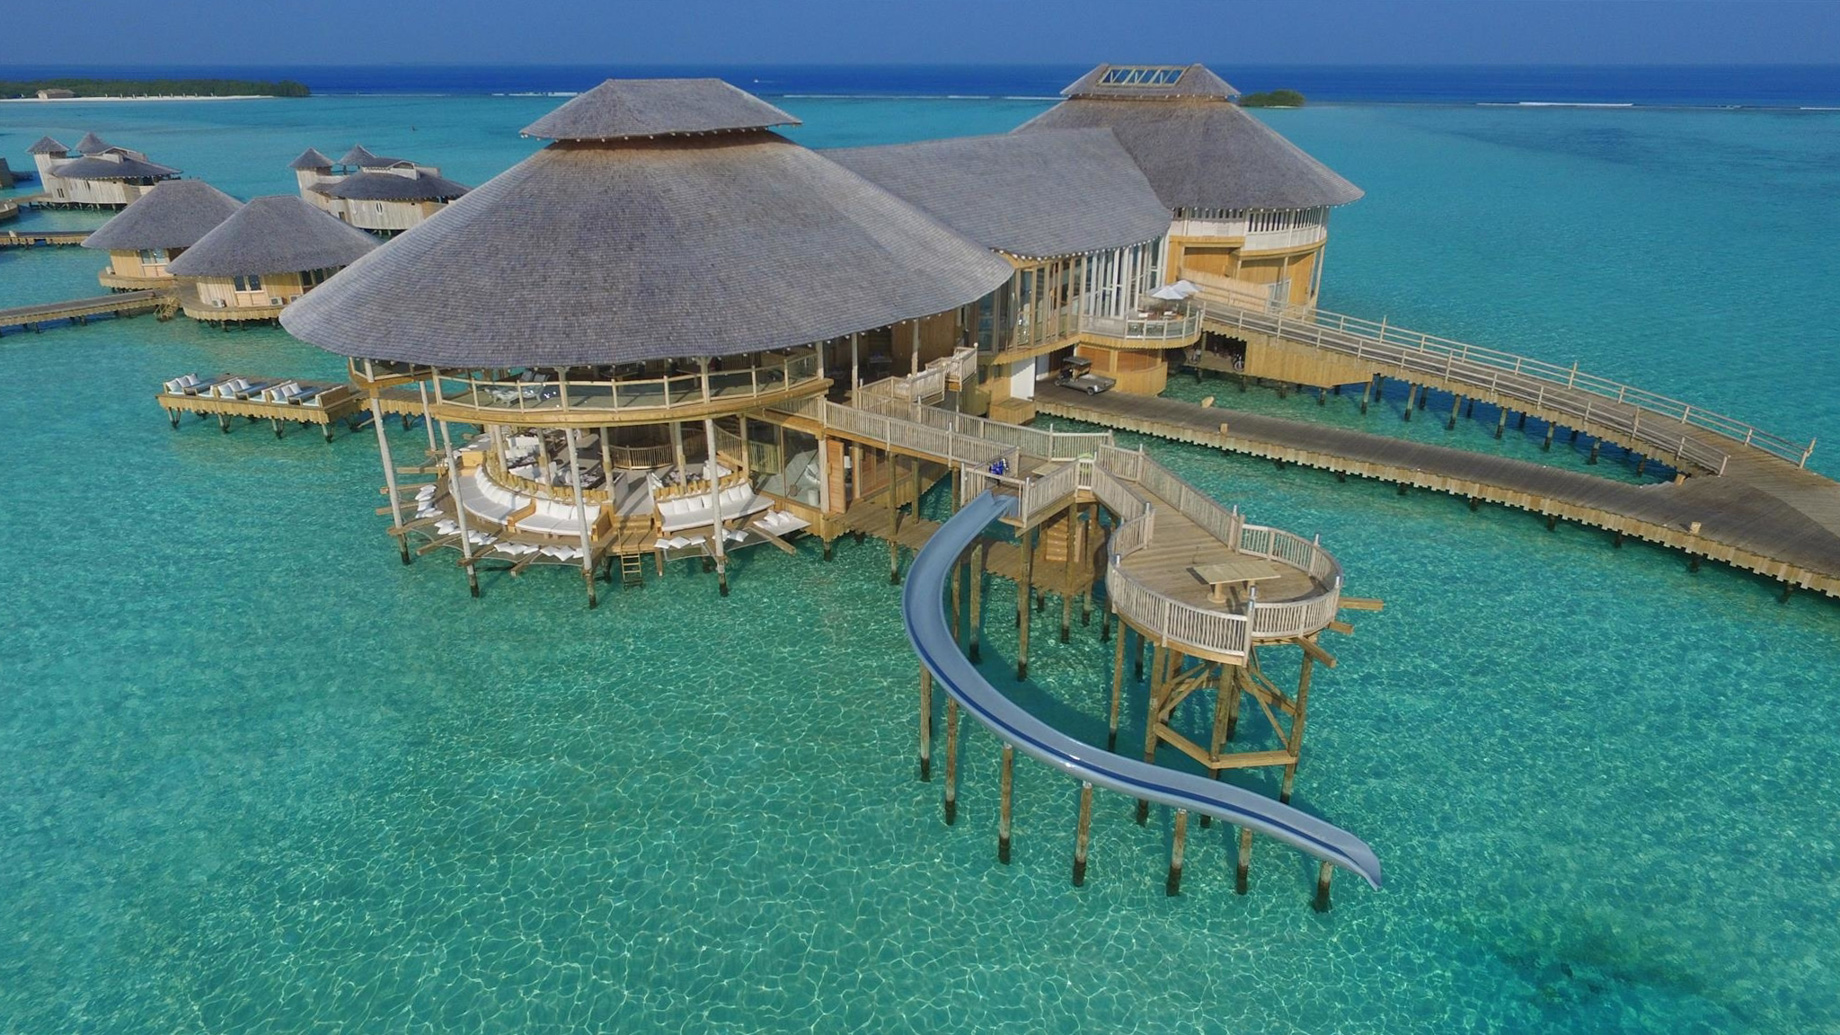 Soneva Jani Resort – Noonu Atoll, Medhufaru, Maldives – The Gathering Aerial